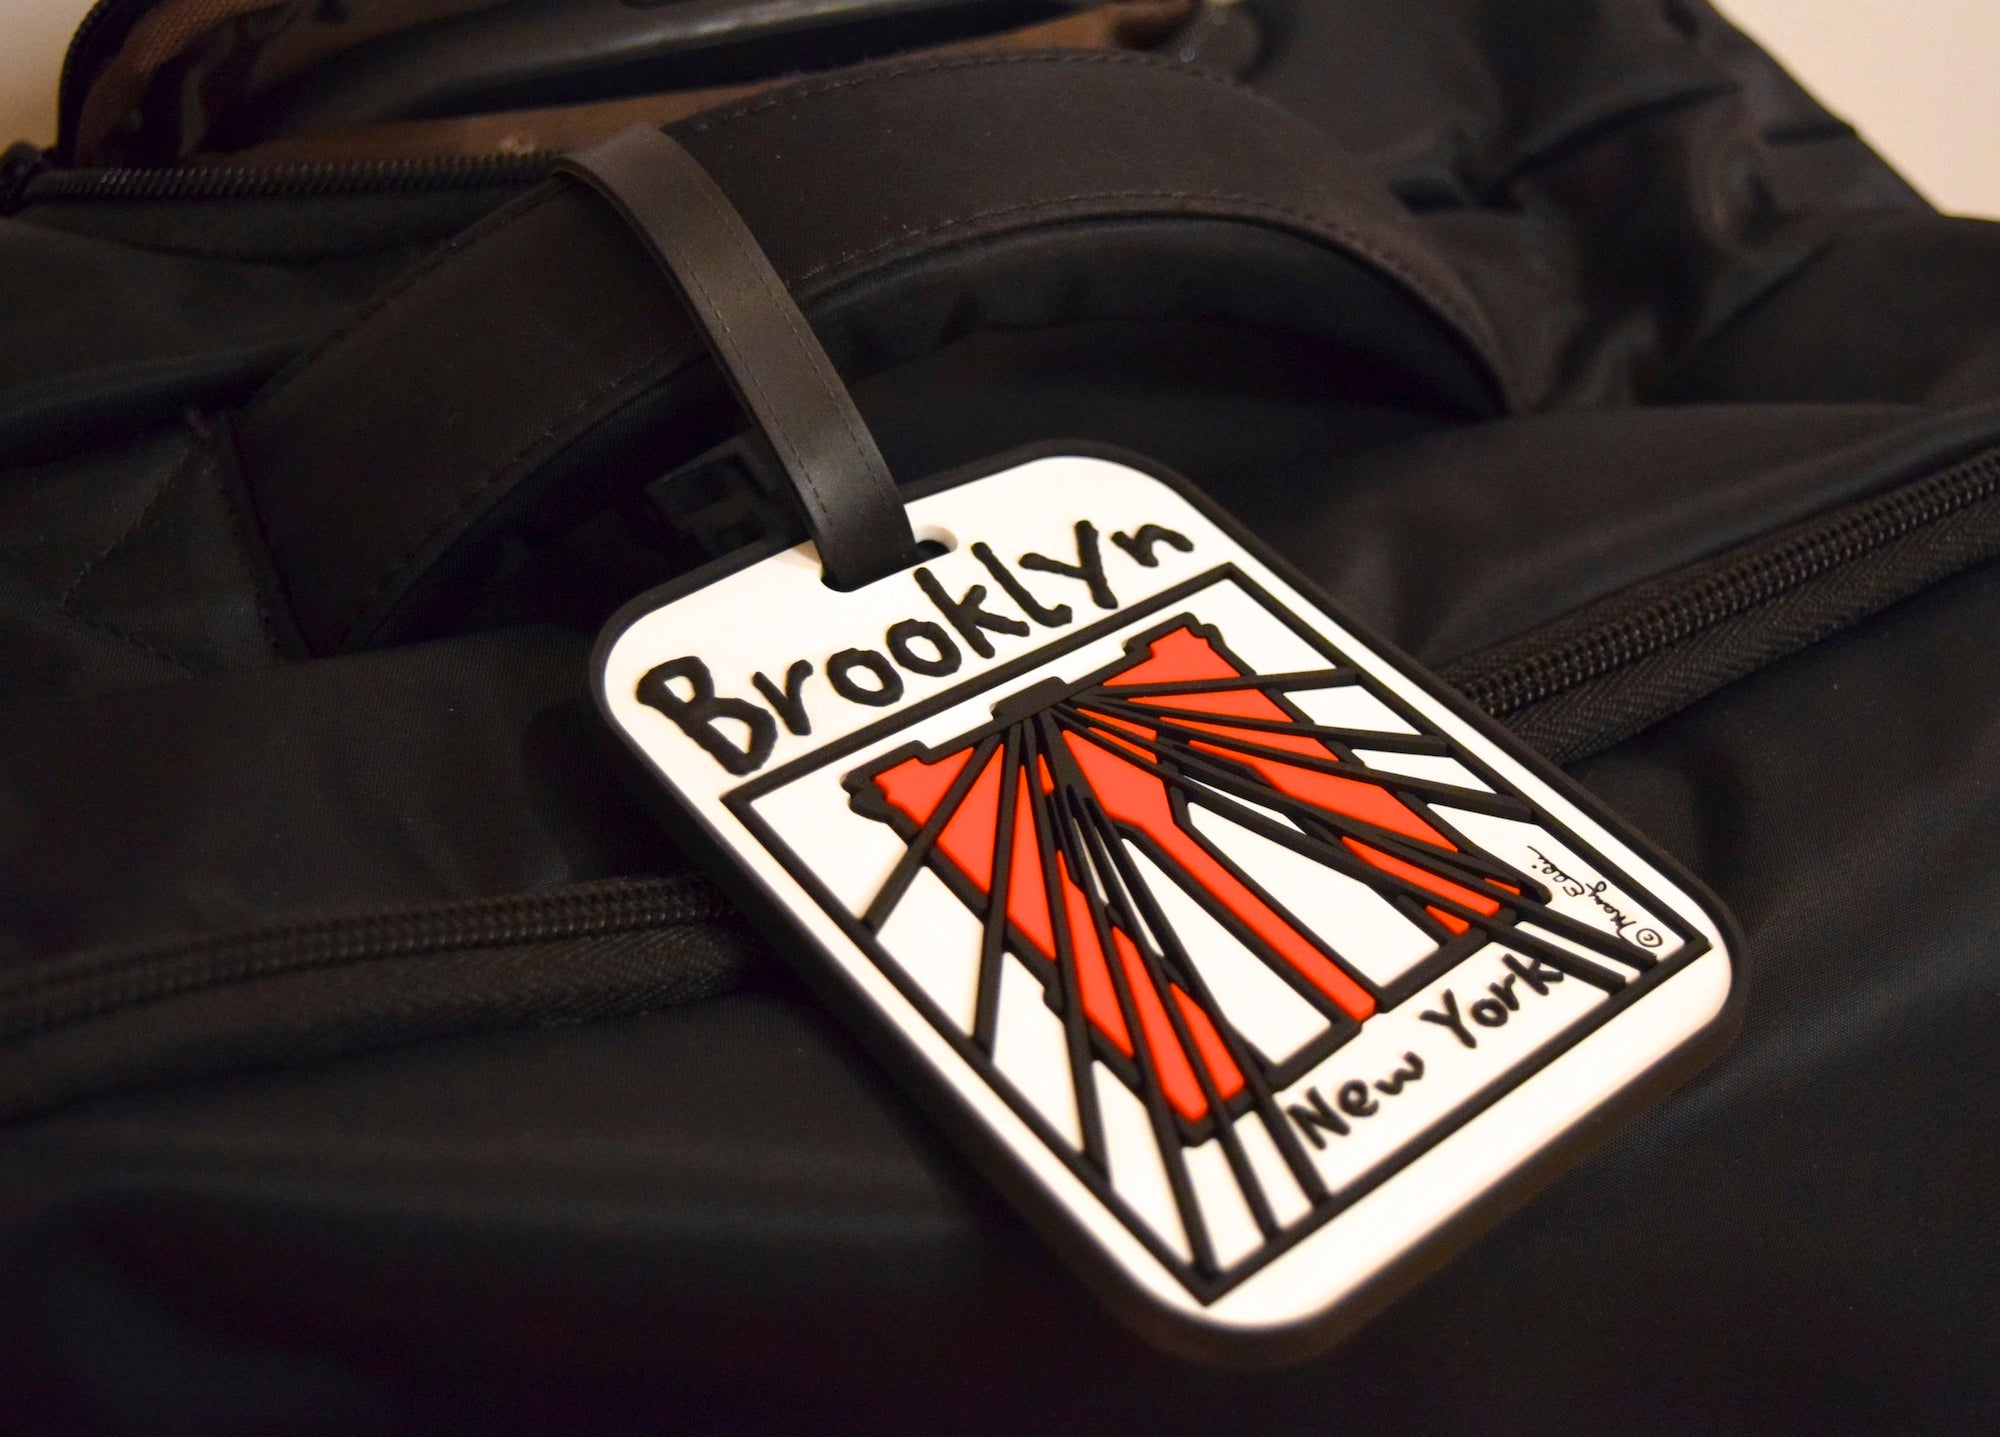 Finex Set of 4 - Supreme New York Travel Silicone Luggage Tags Bag